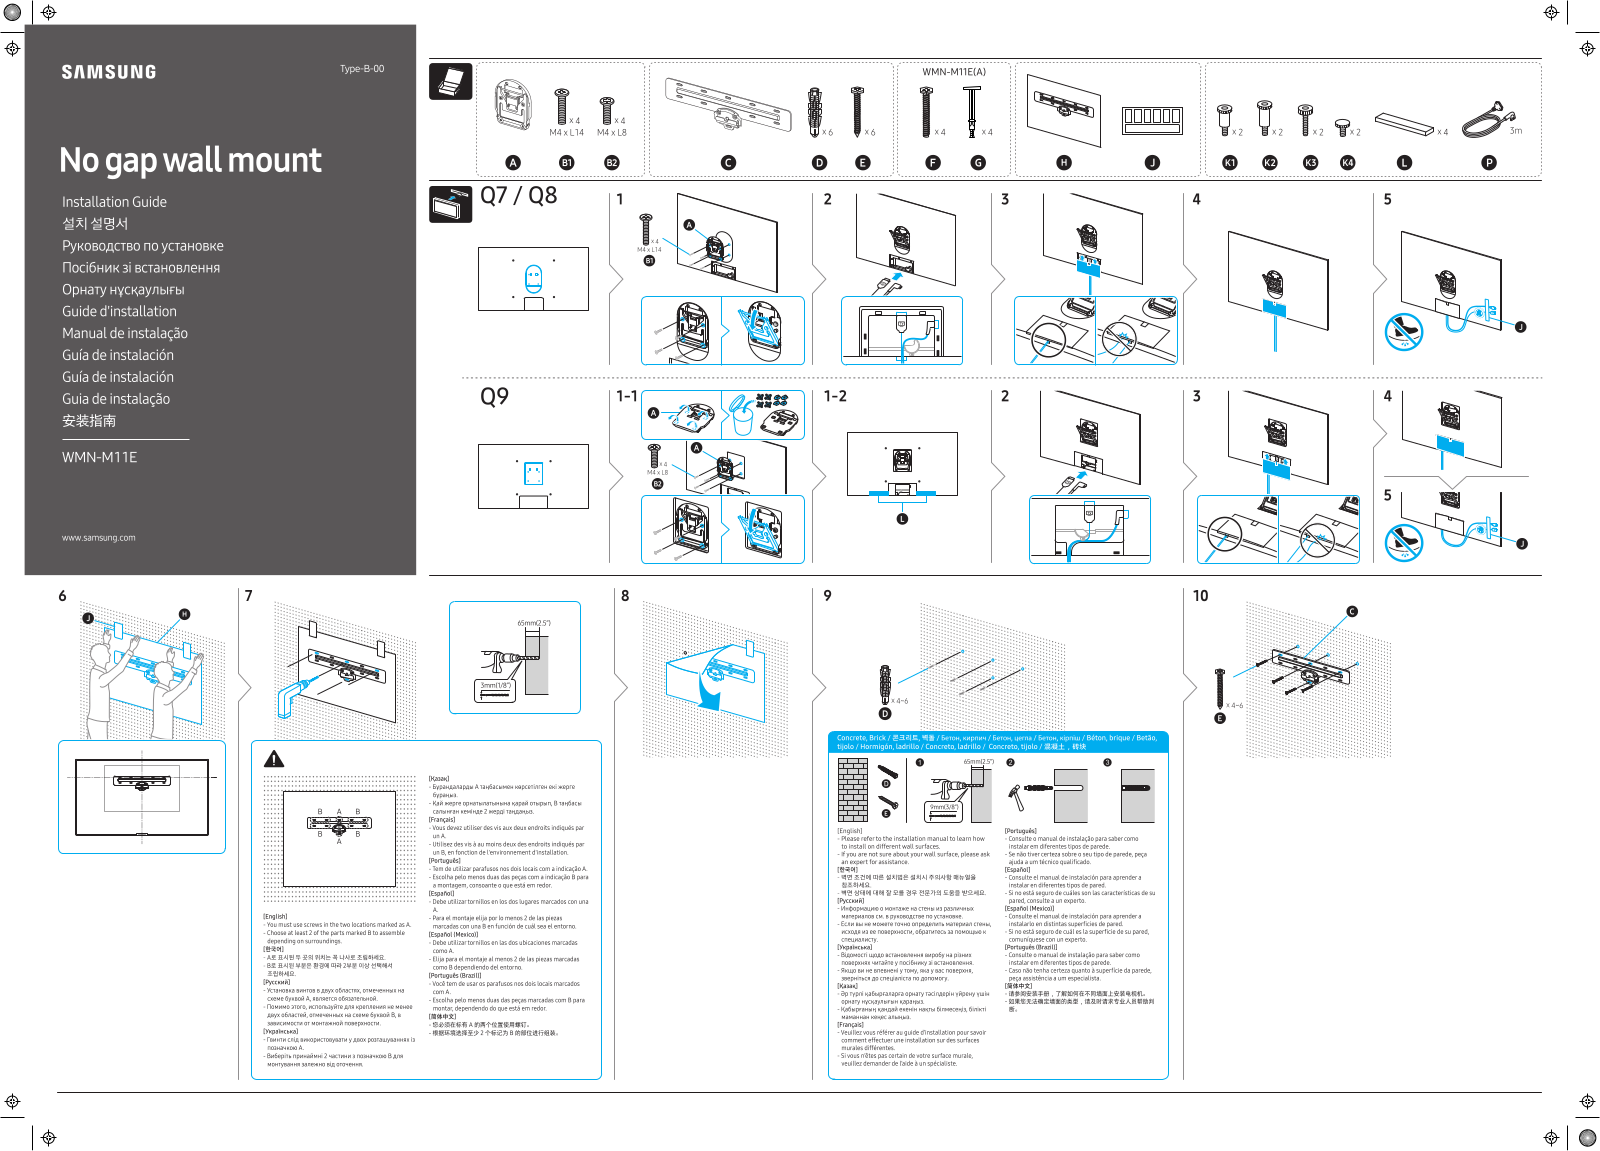 Samsung WMN-M11EB User Manual